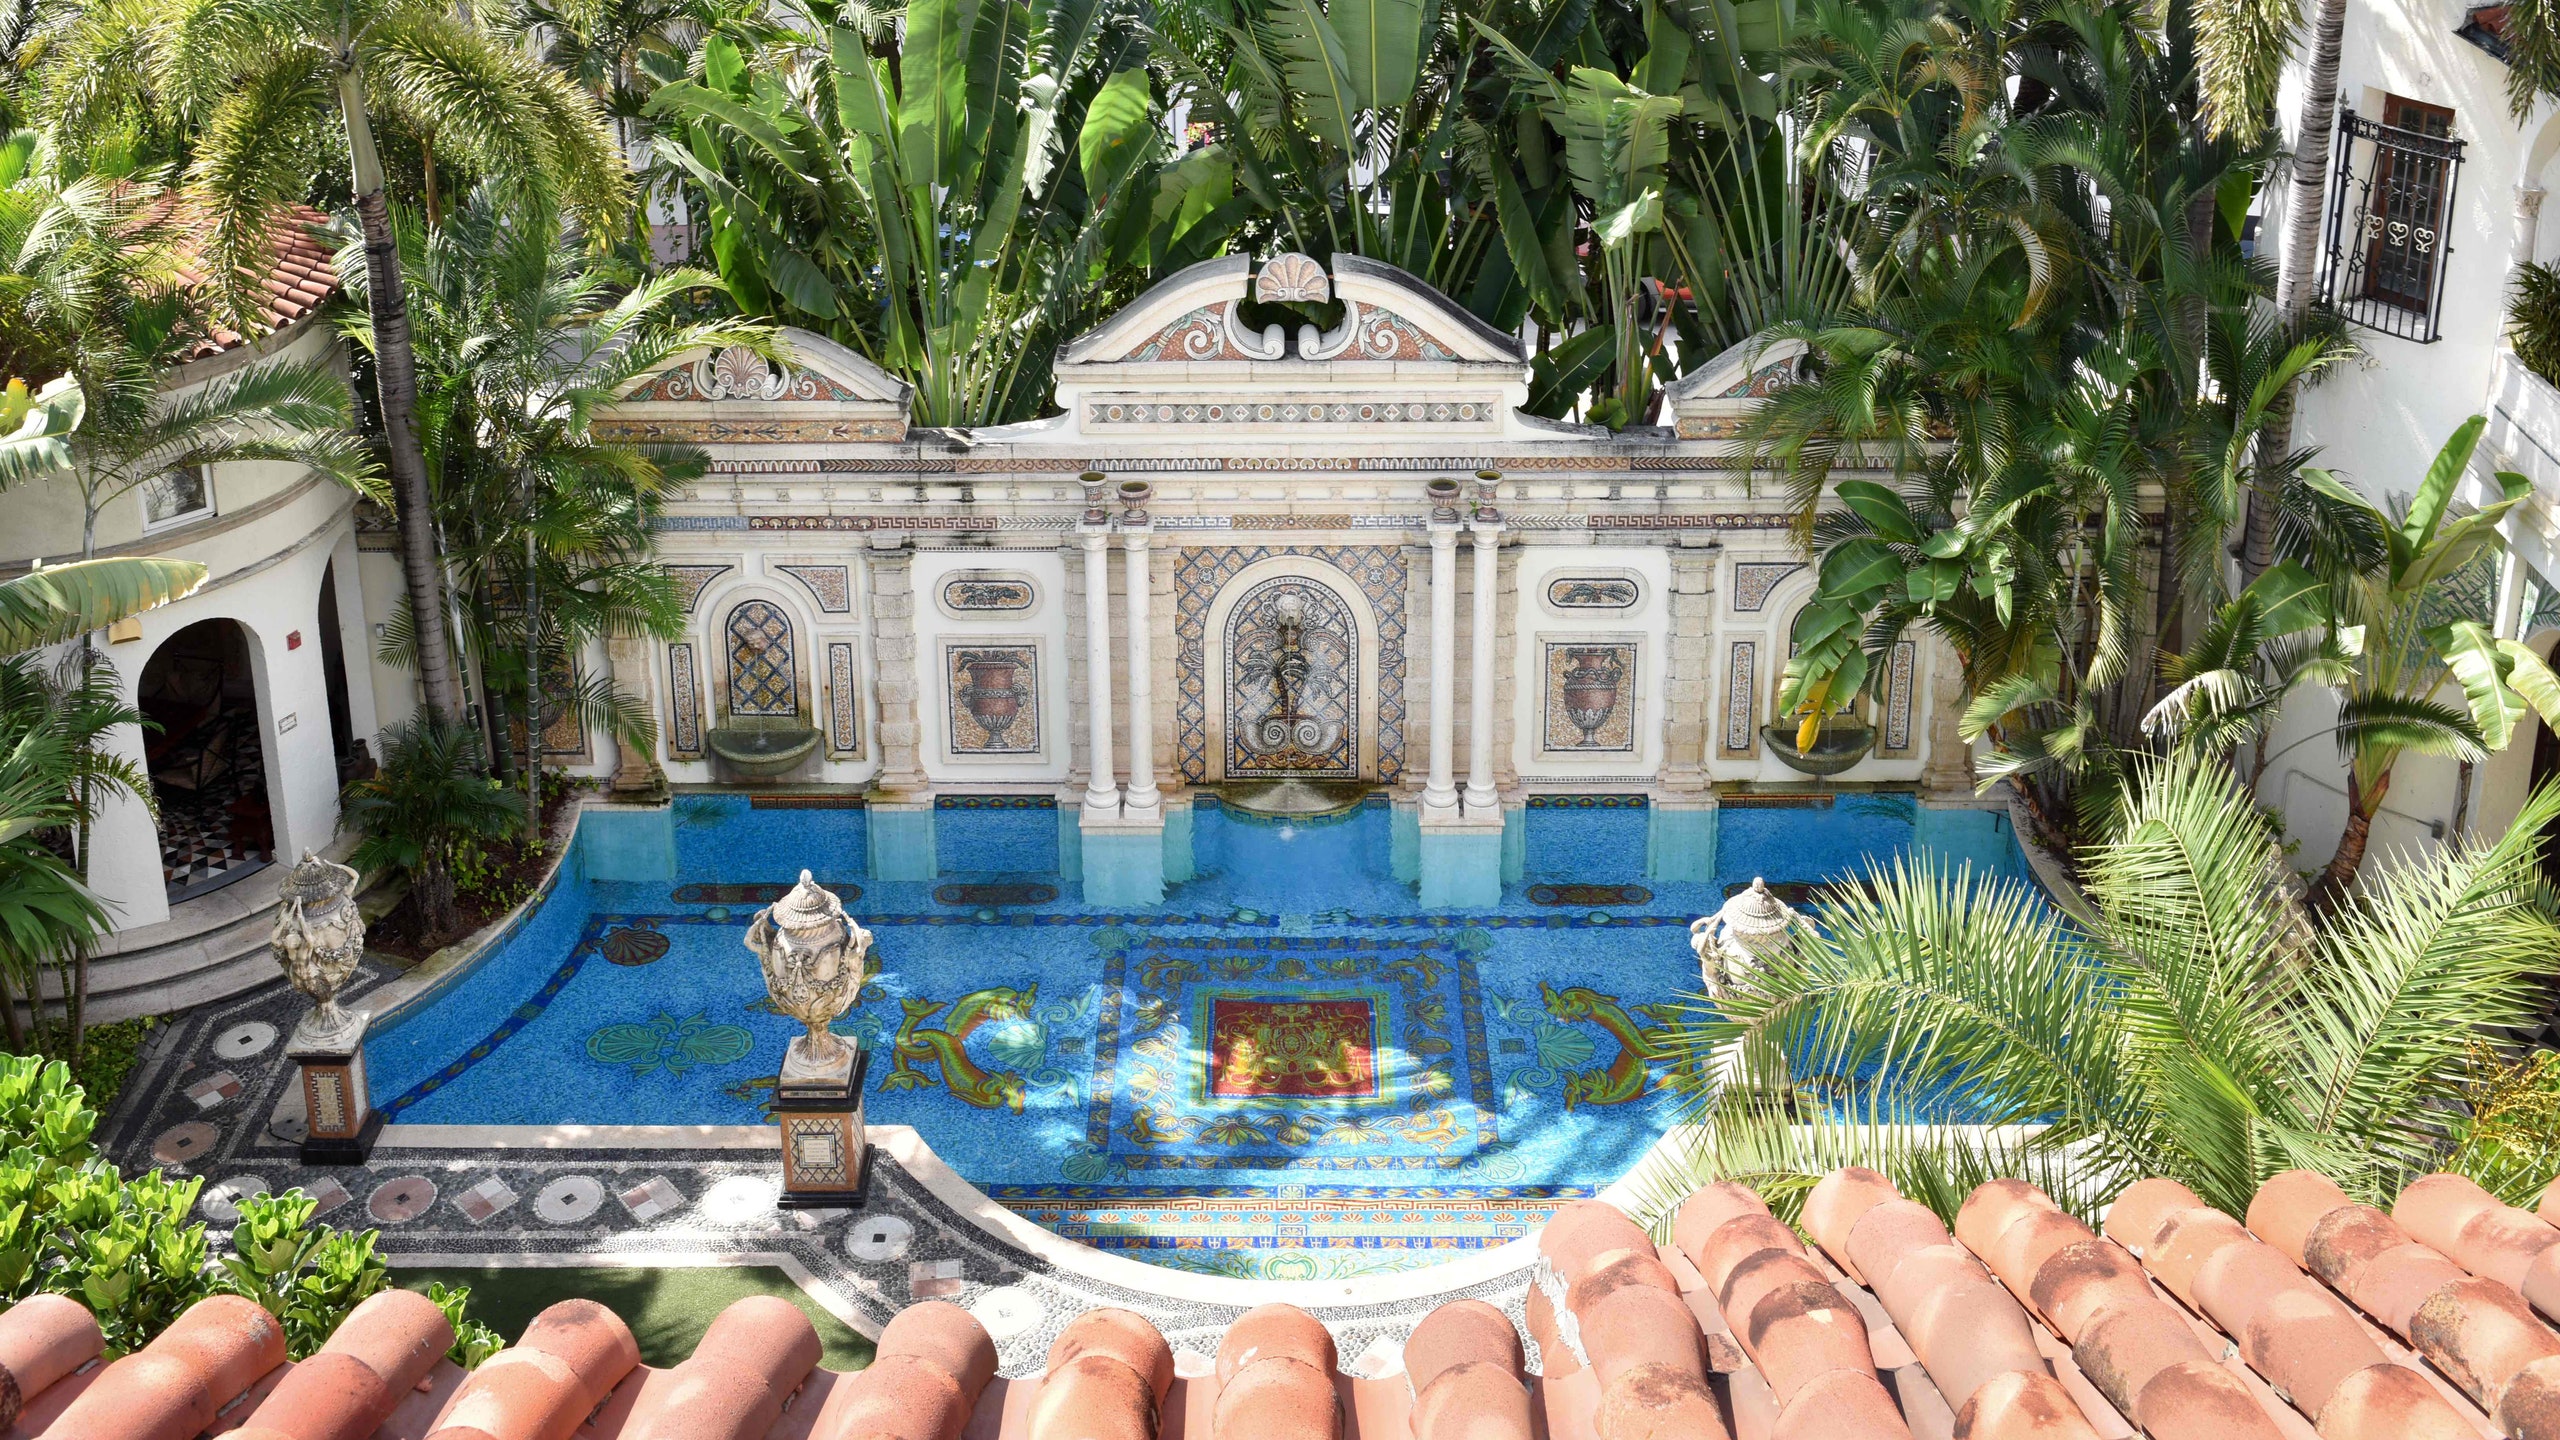 5 Secrets of the Versace Mansion Cond Nast Traveler